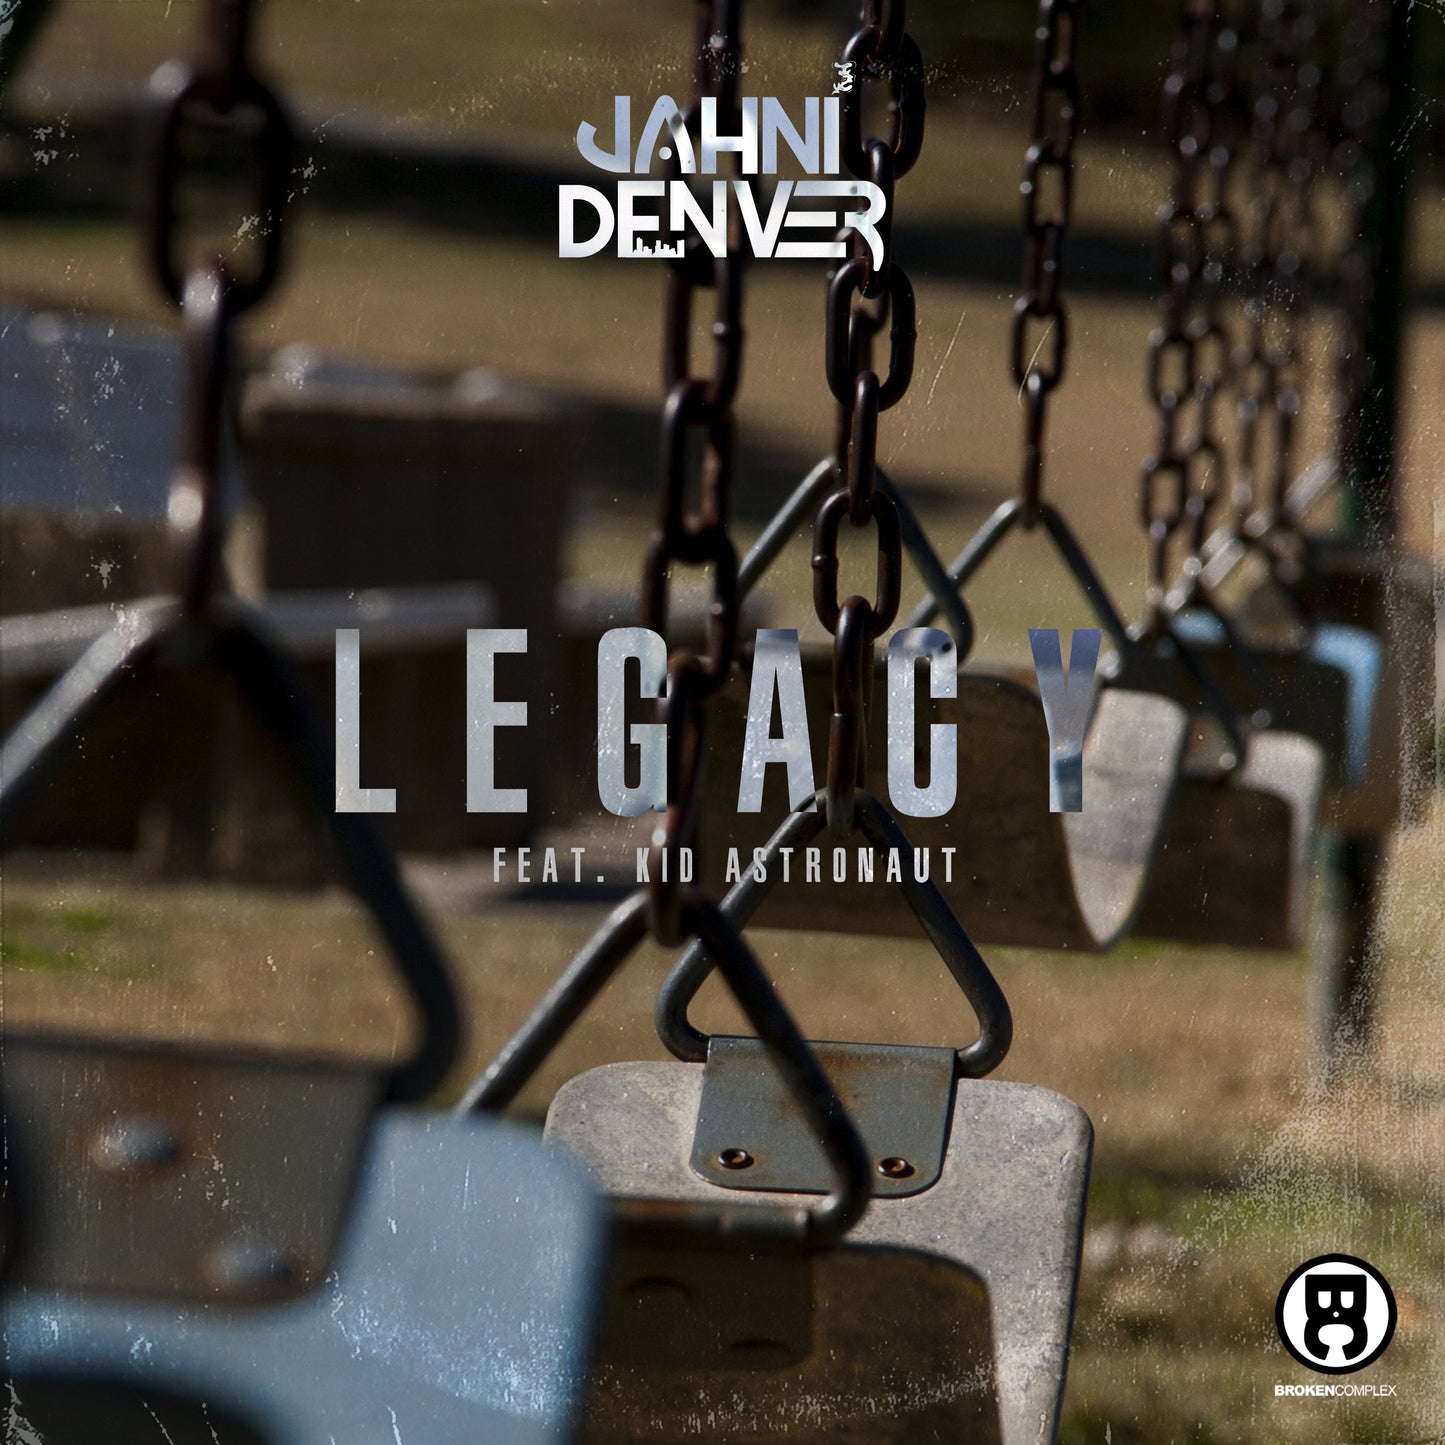 Legacy (Single)